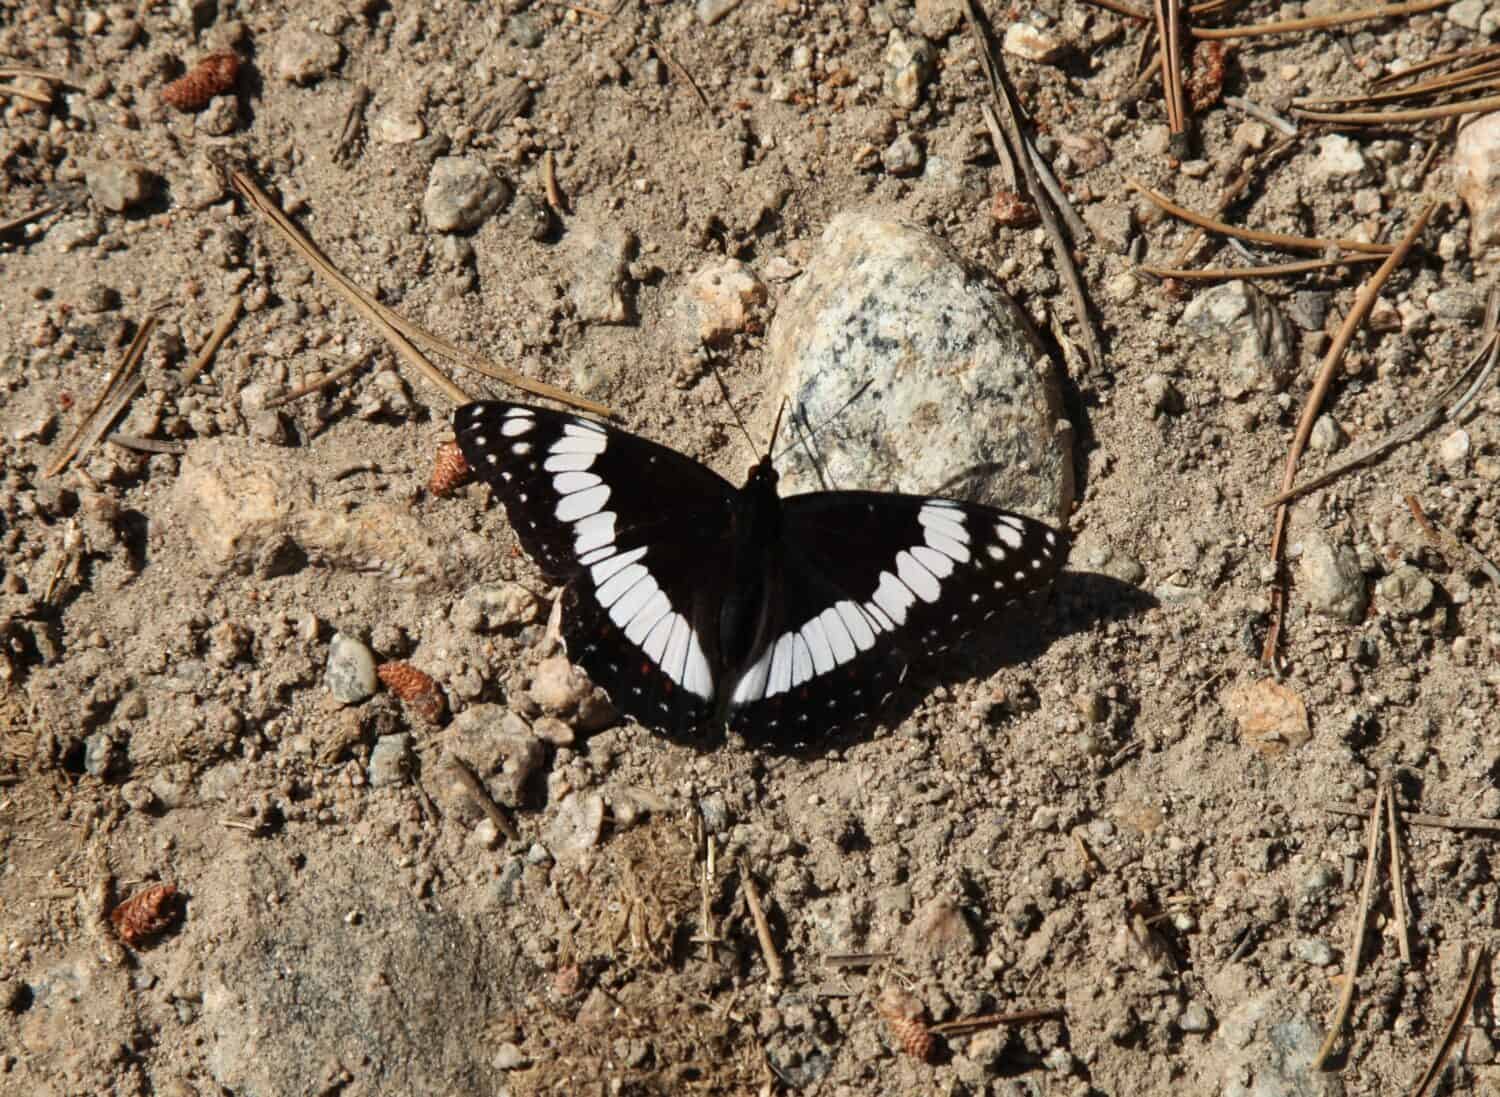 Ammiraglio di Weidemeyer (Limenitis weidemeyerii) farfalla in bianco e nero nelle montagne Beartooth, Montana